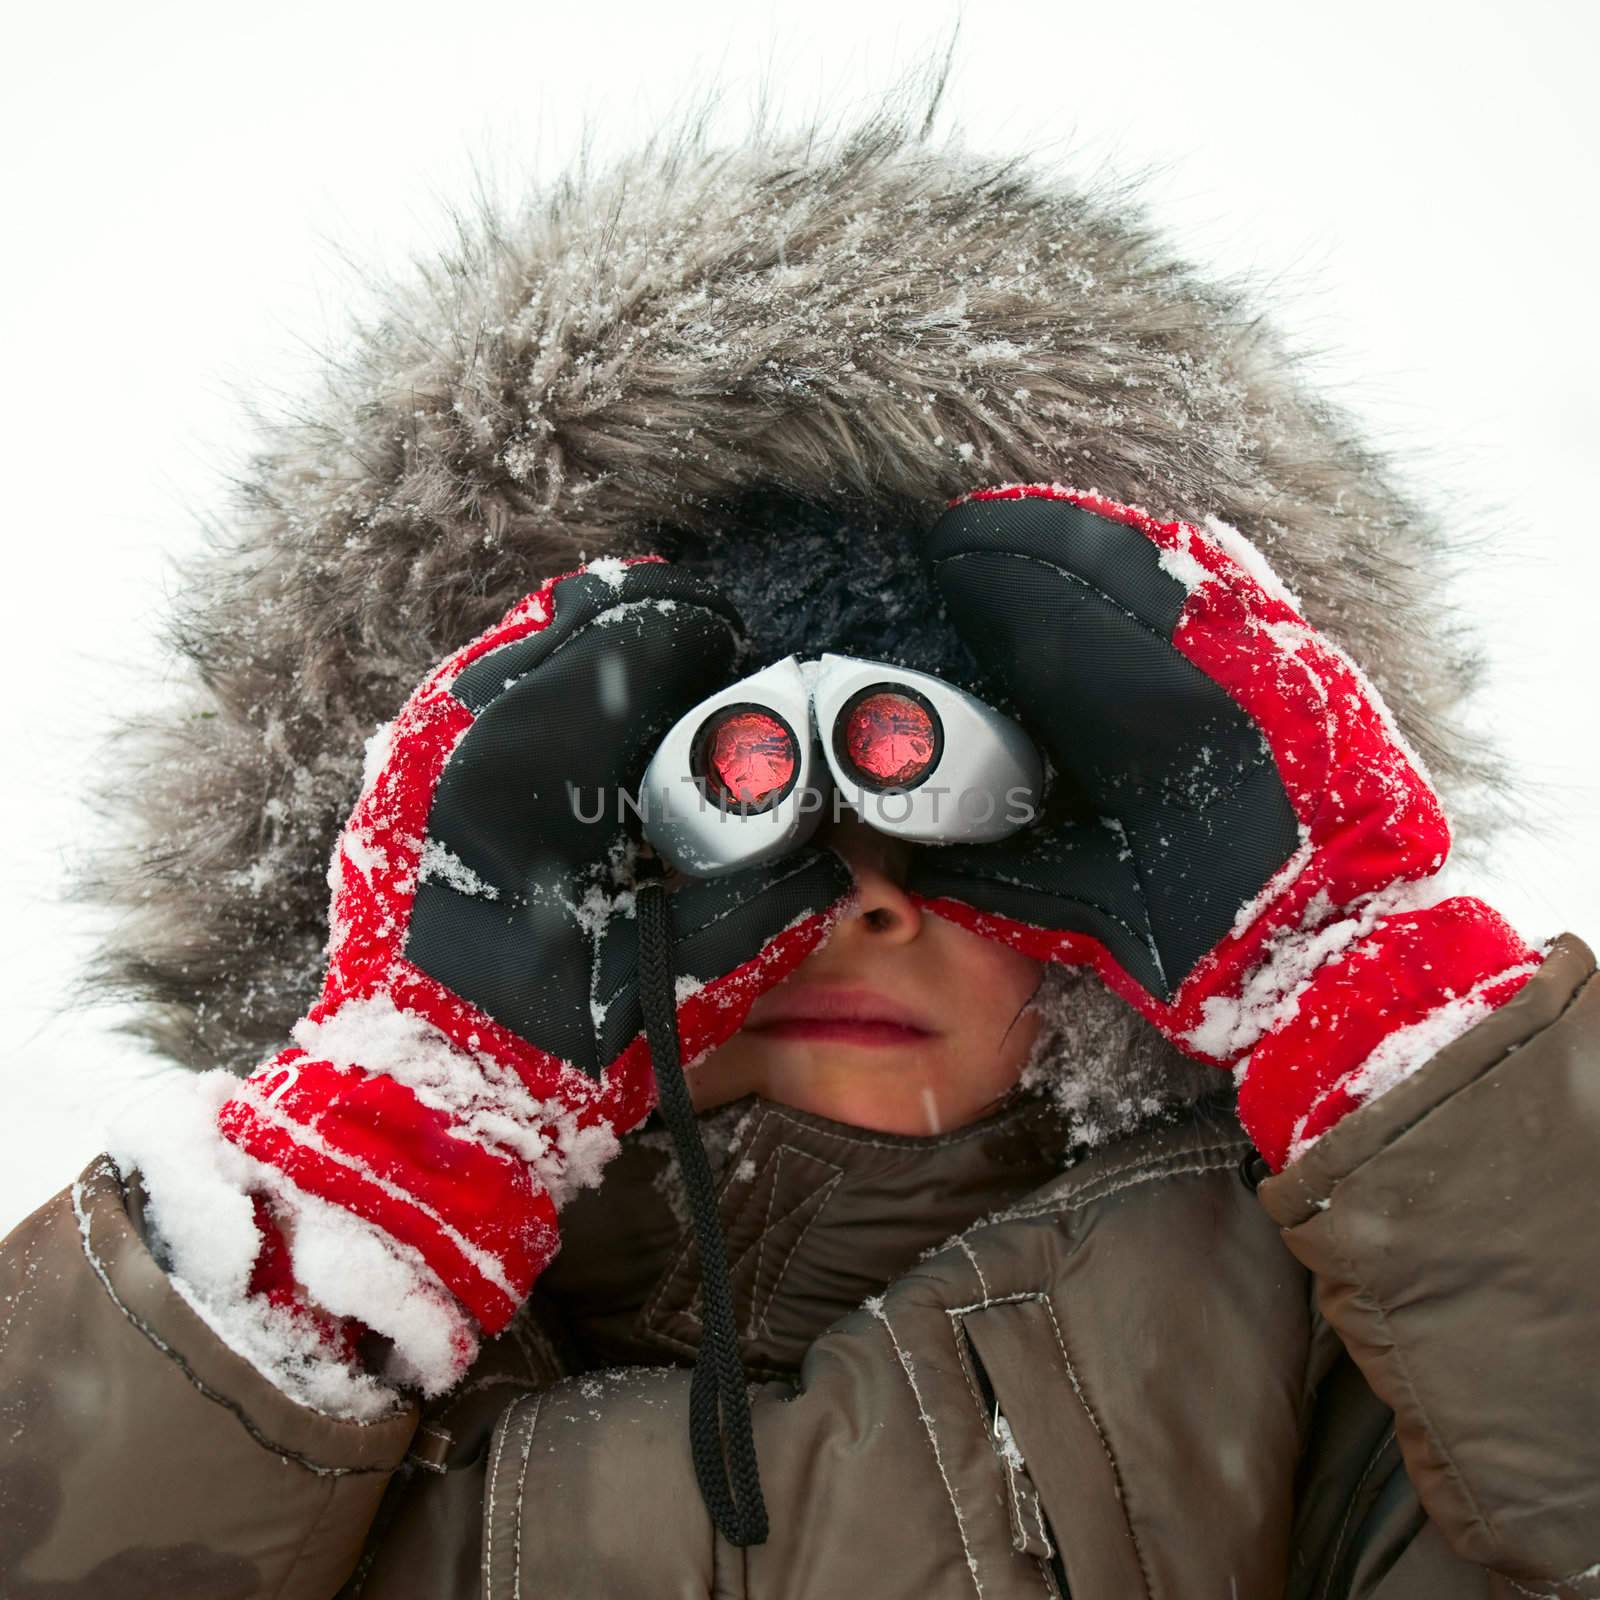 Kid with binocular by naumoid